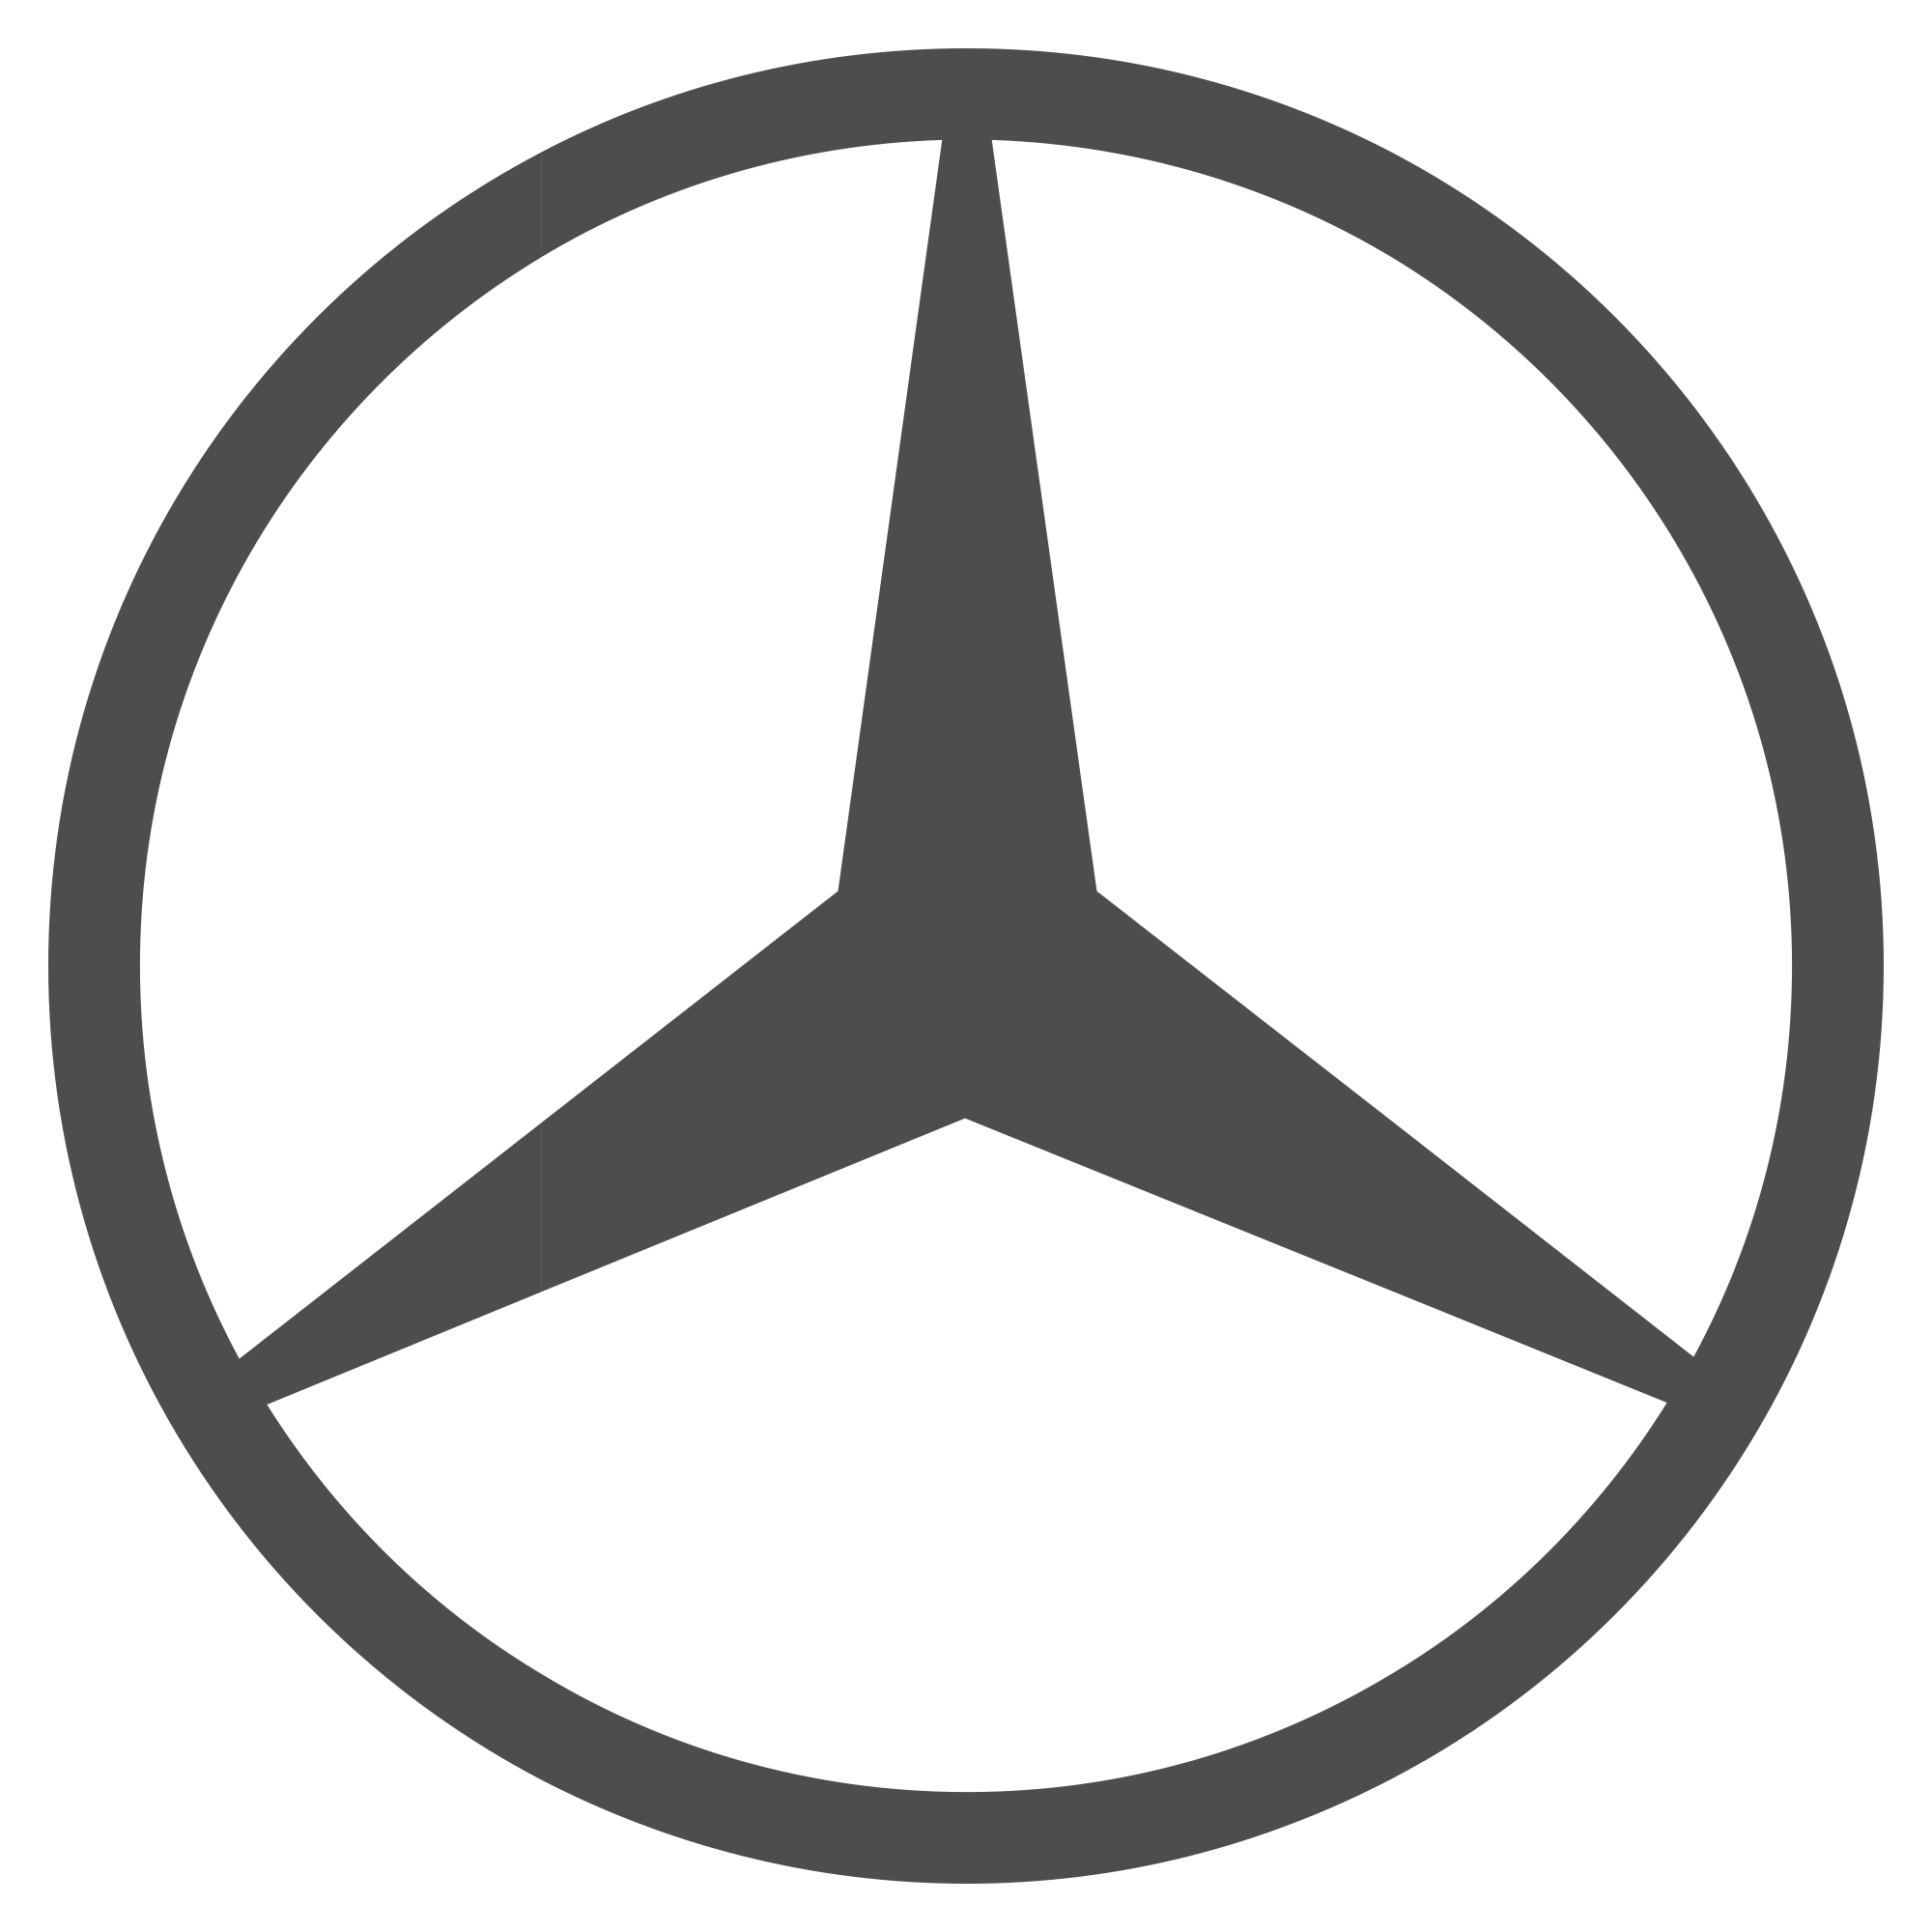 2 C Logo - File:Mercedes-Benz free logo.svg - Wikimedia Commons